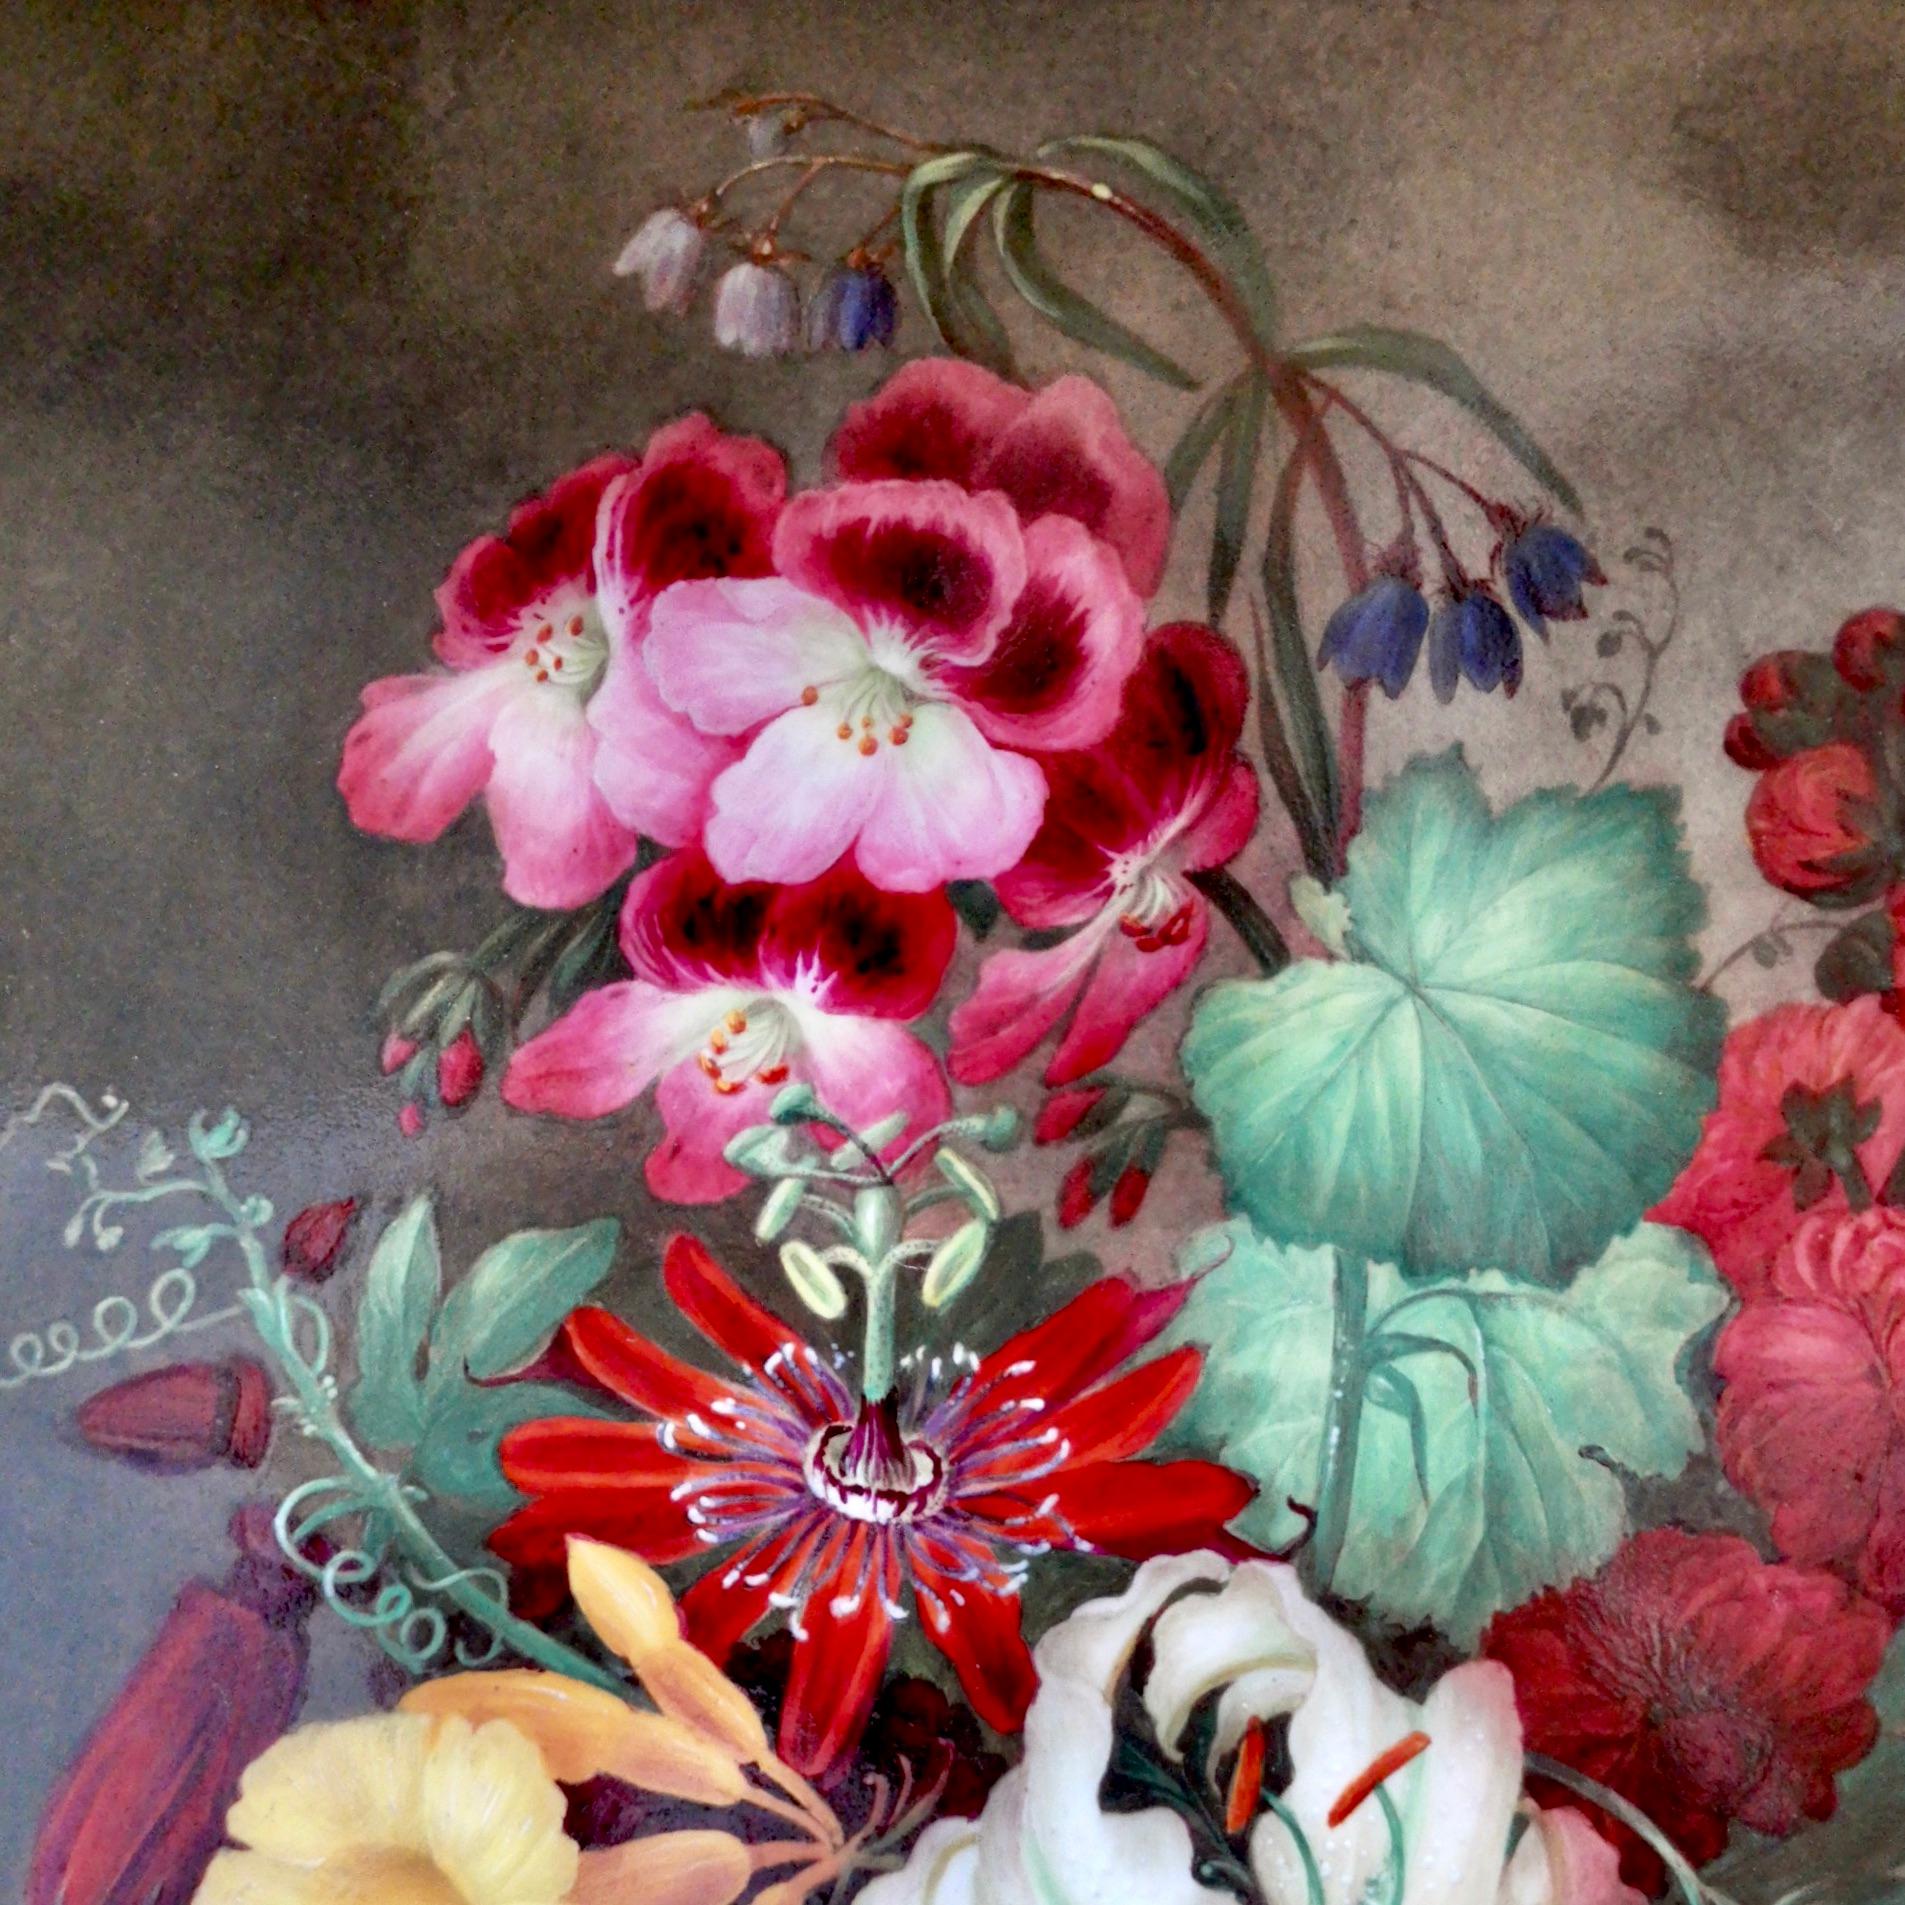 English Coalport Framed Porcelain Plaque of Flower Bouquet, Victorian, circa 1840